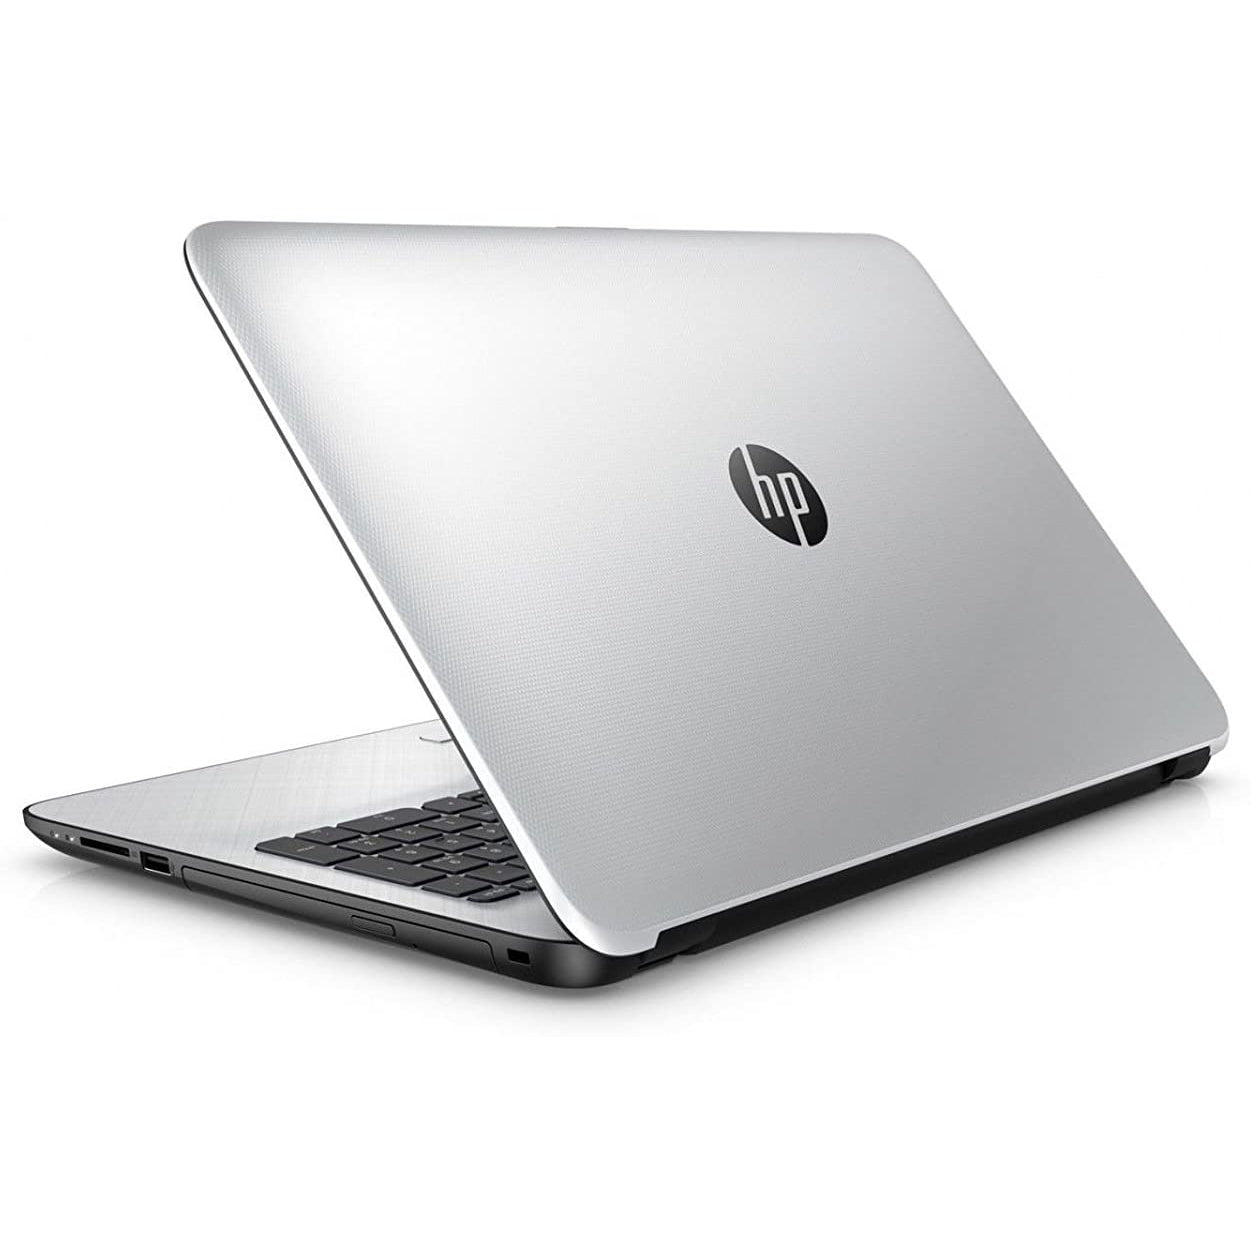 HP-15-AY026NA Laptop, 8GB RAM, 2TB HDD, 15.6", Intel Pentium N3710, White